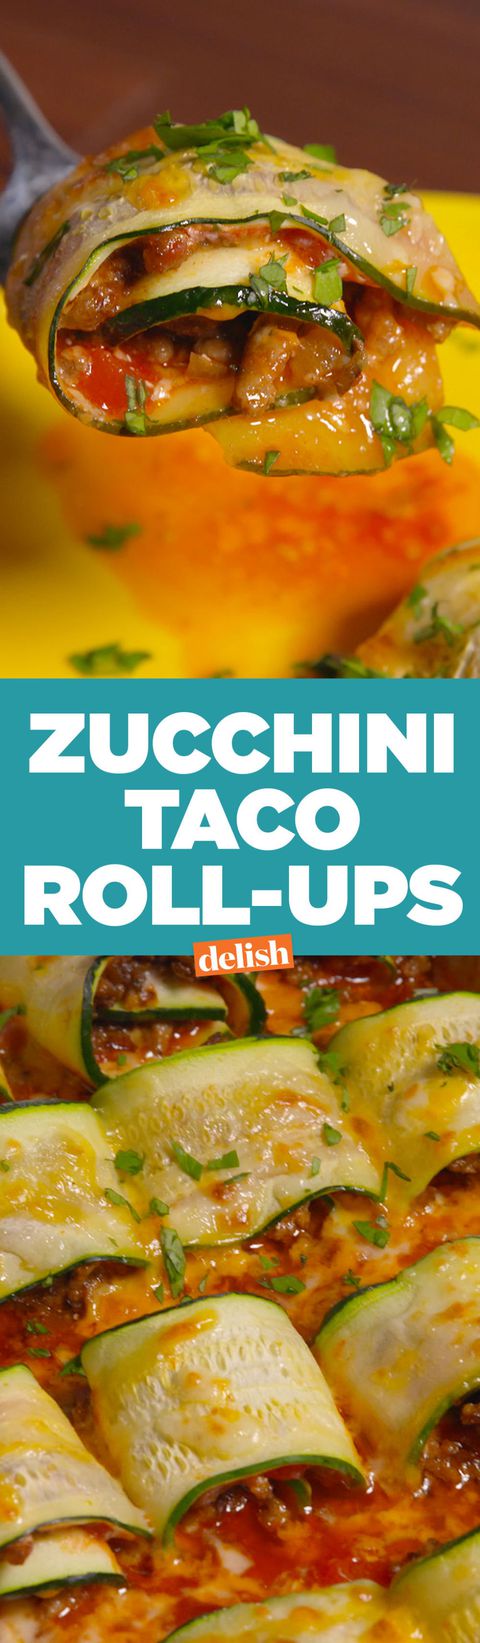 Zucchini Taco Roll-Ups Pinterest